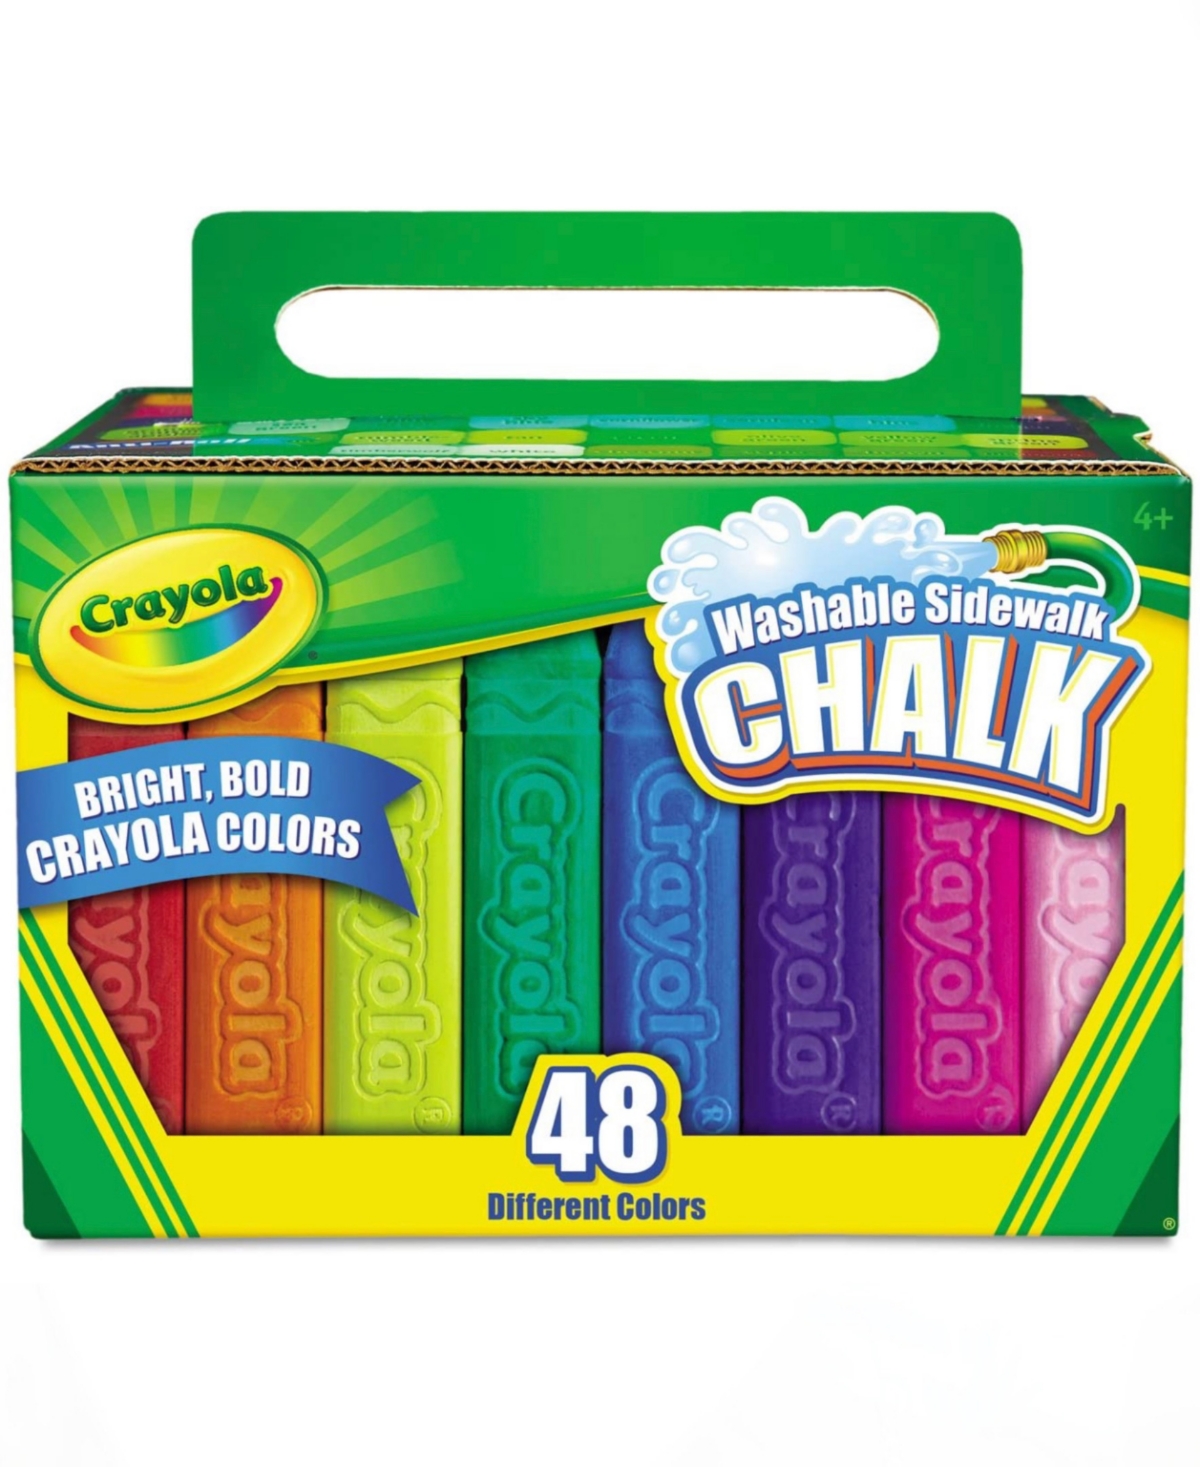 Crayola Babies' Mess Free Sidewalk Chalk In Various Colors For Outdoor Sidewalk Playtime In Multi Colored Plastic